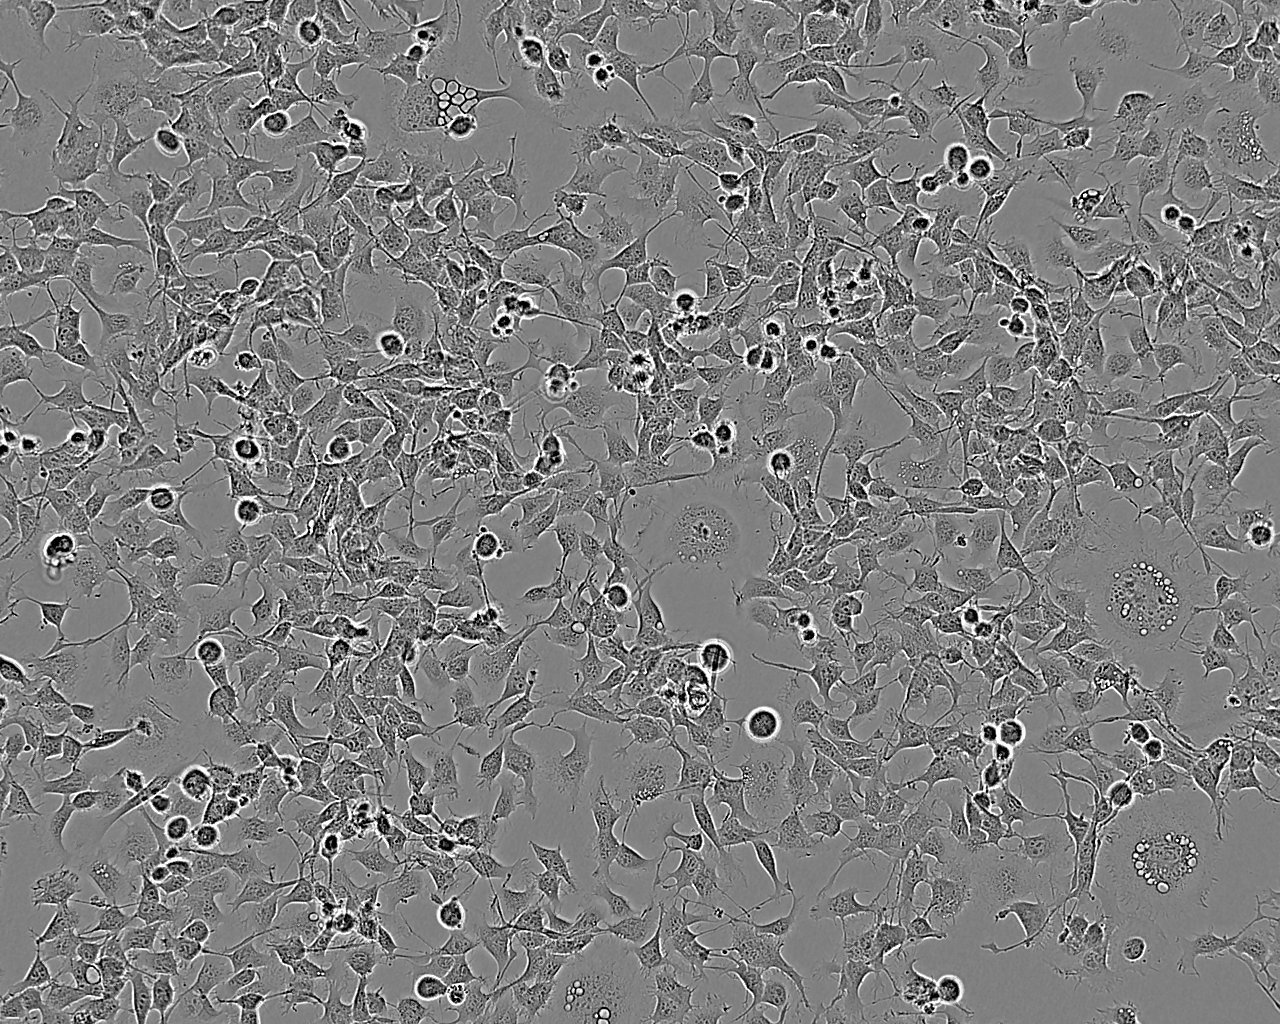 NCI-H719 cell line人小细胞肺癌细胞系